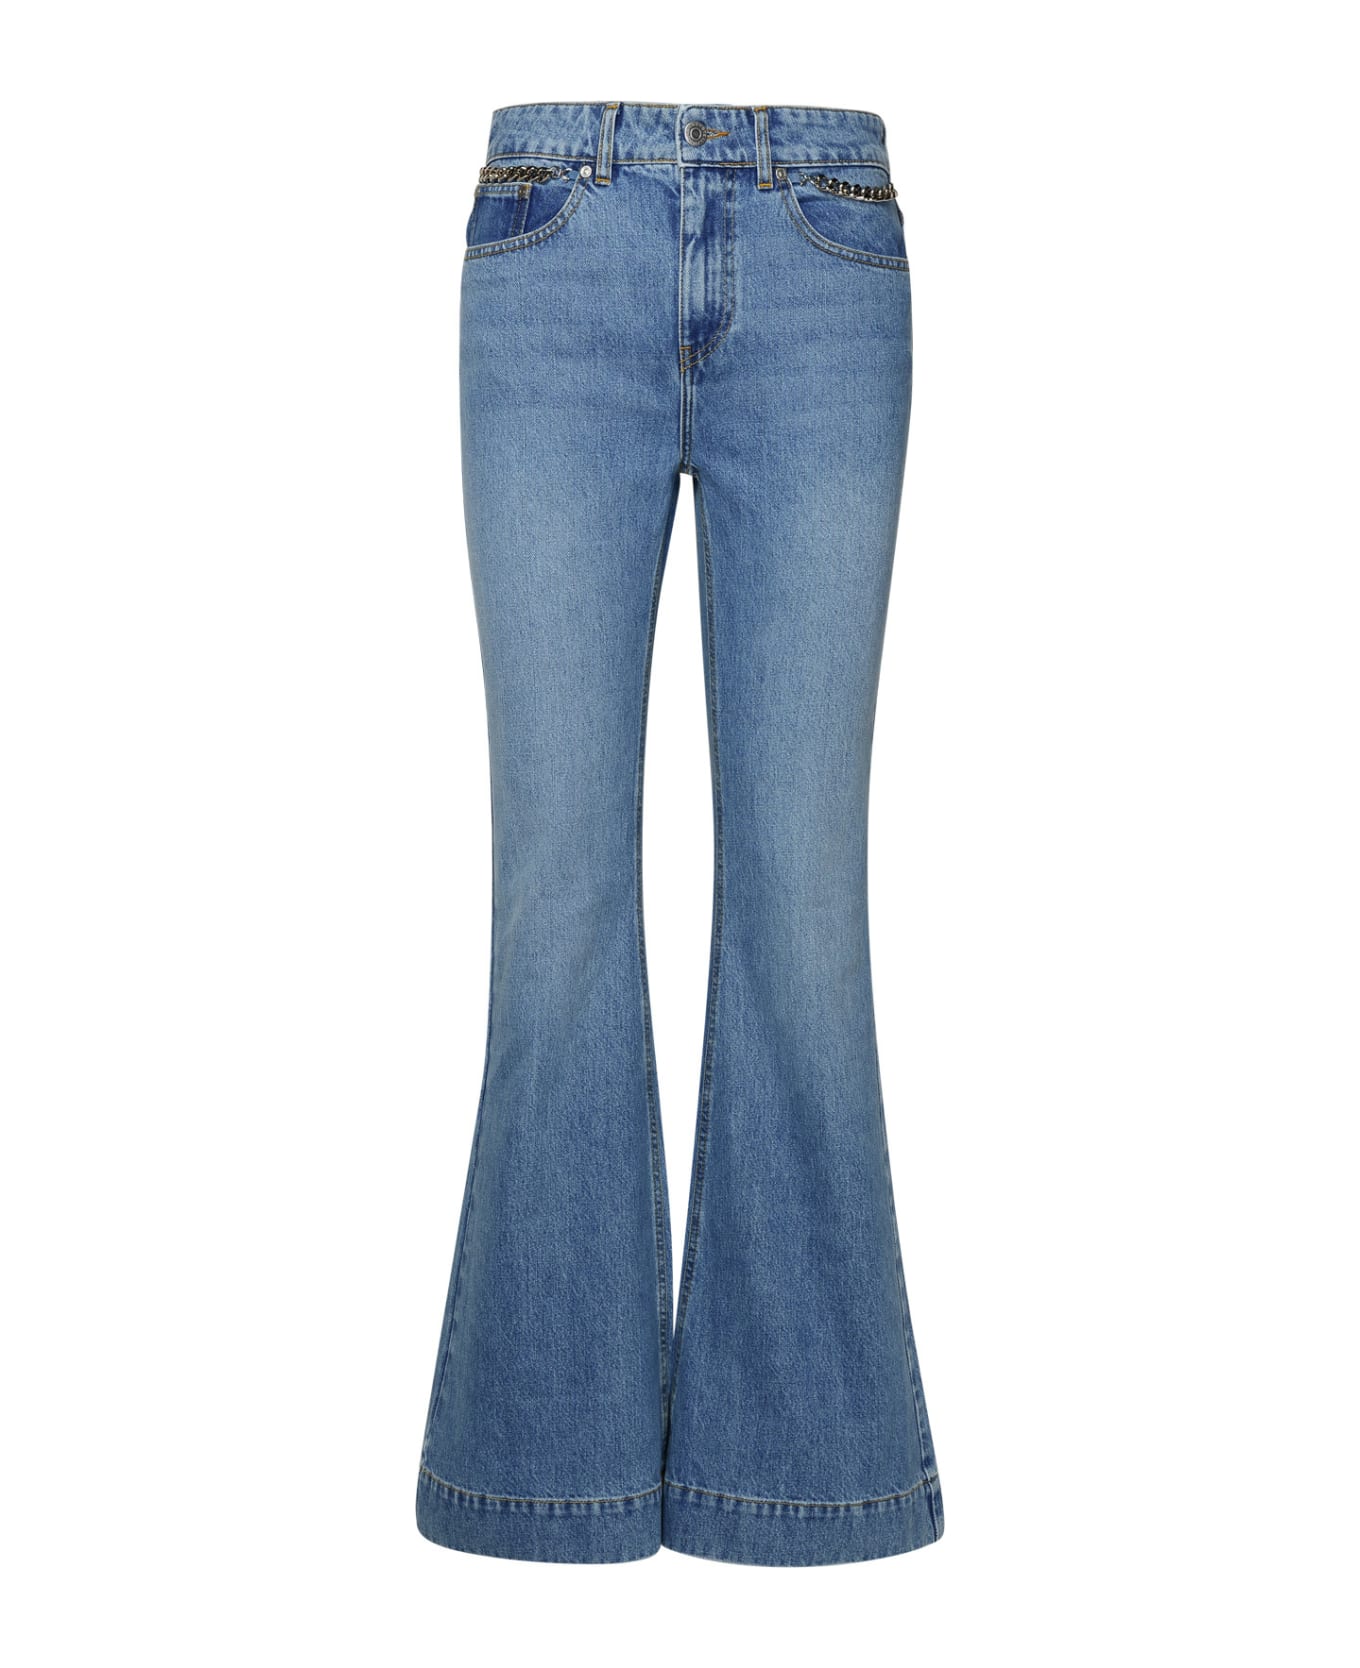 Stella McCartney Falabella Chain Flared Jeans - VINTAGE BLUE